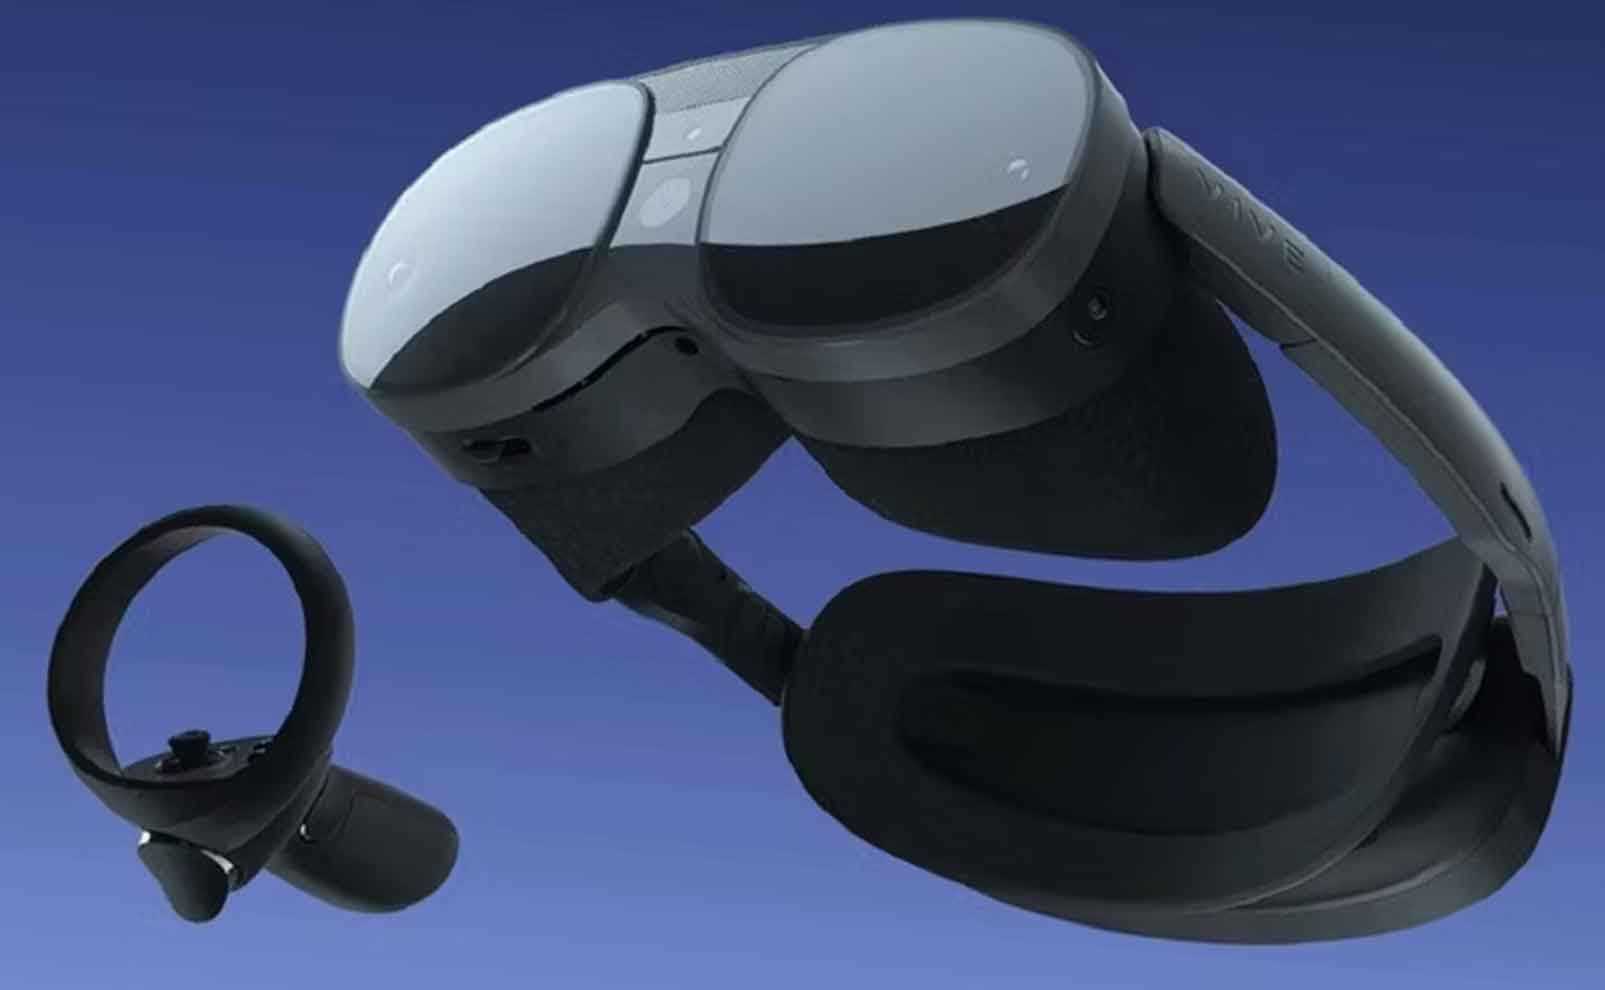 HTC Vive XR Elite standalone VR headset